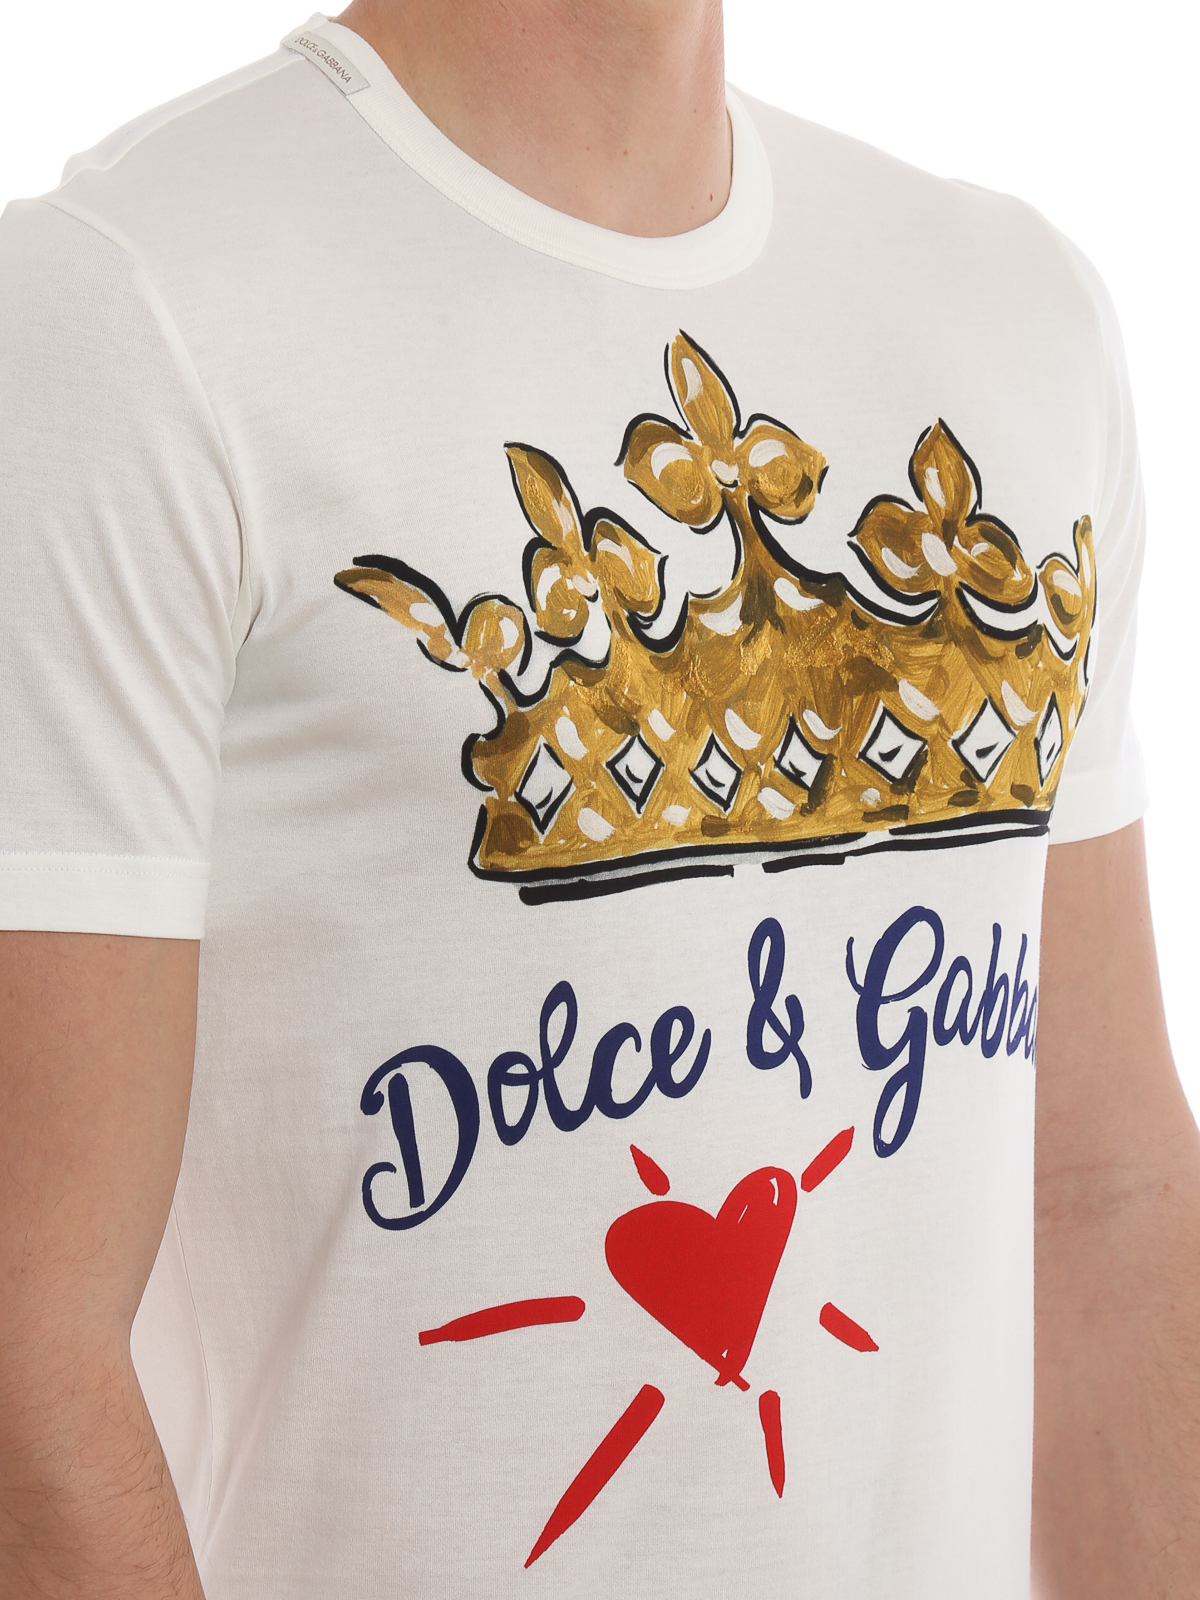 Planeet Liever Vervormen T-shirts Dolce & Gabbana - Dolce & Gabbana crown print Tee -  G8IA8THH7QWHWZ47